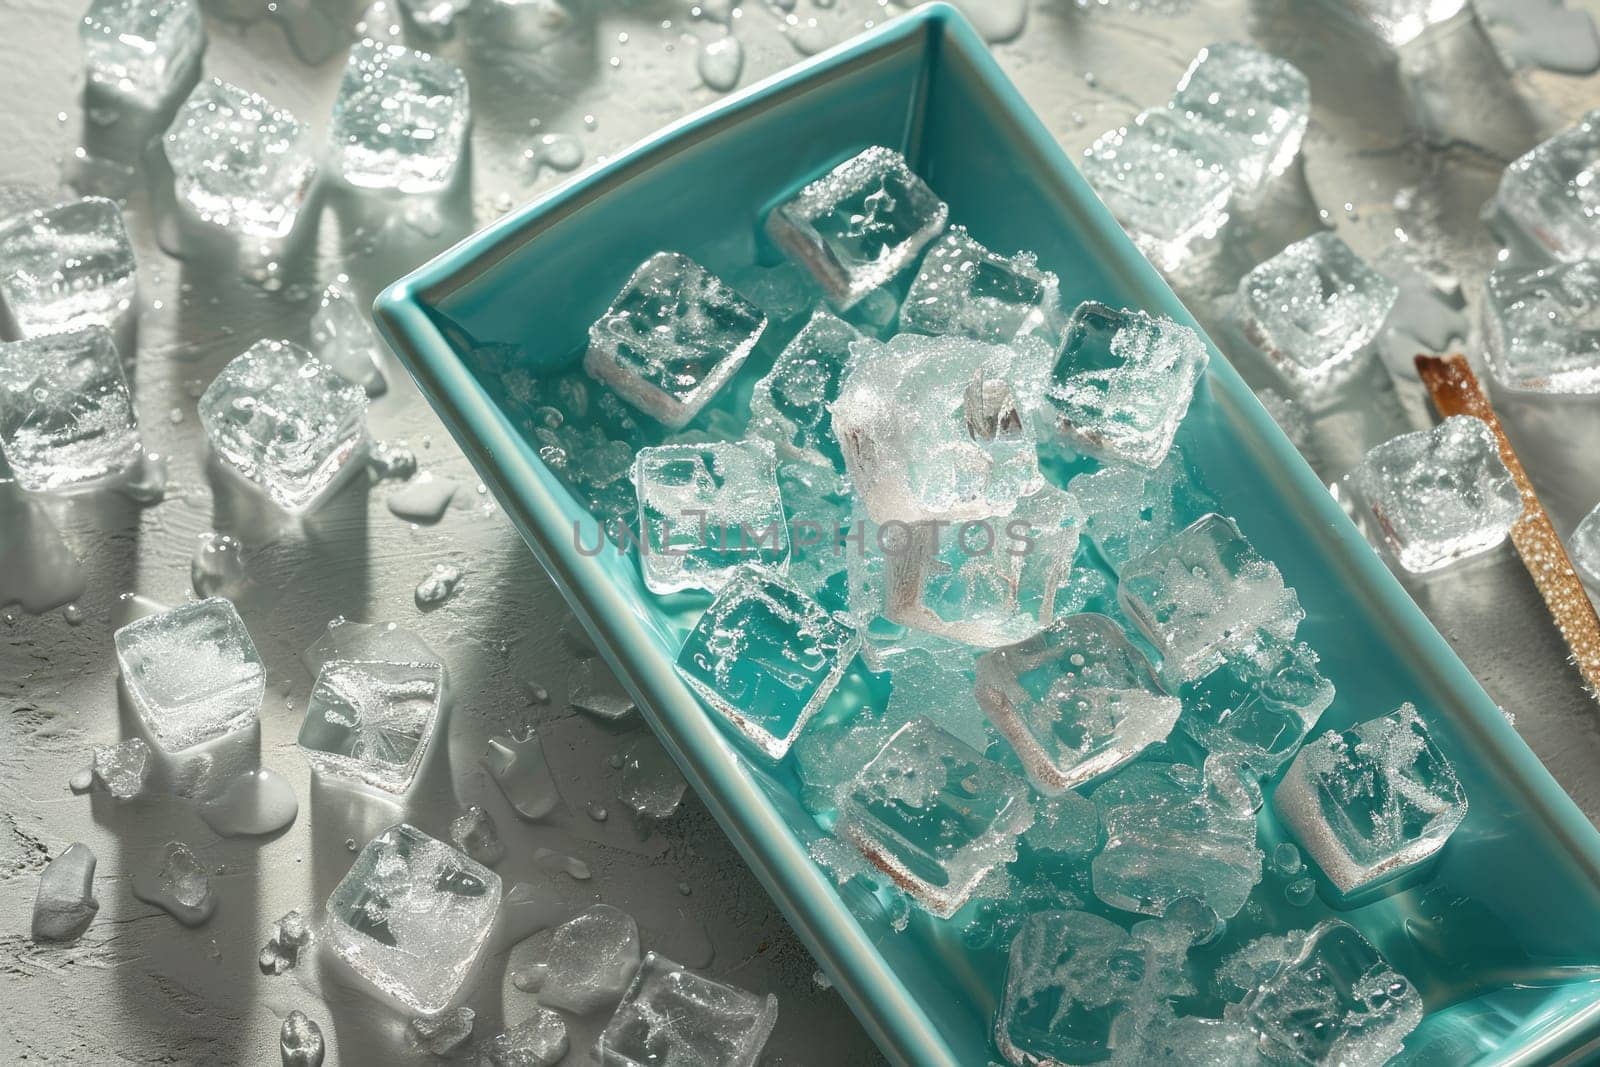 Photo of ice cubes on a light background, symbolizing coolness, freshness and minimalism among natural beauty and elegance.